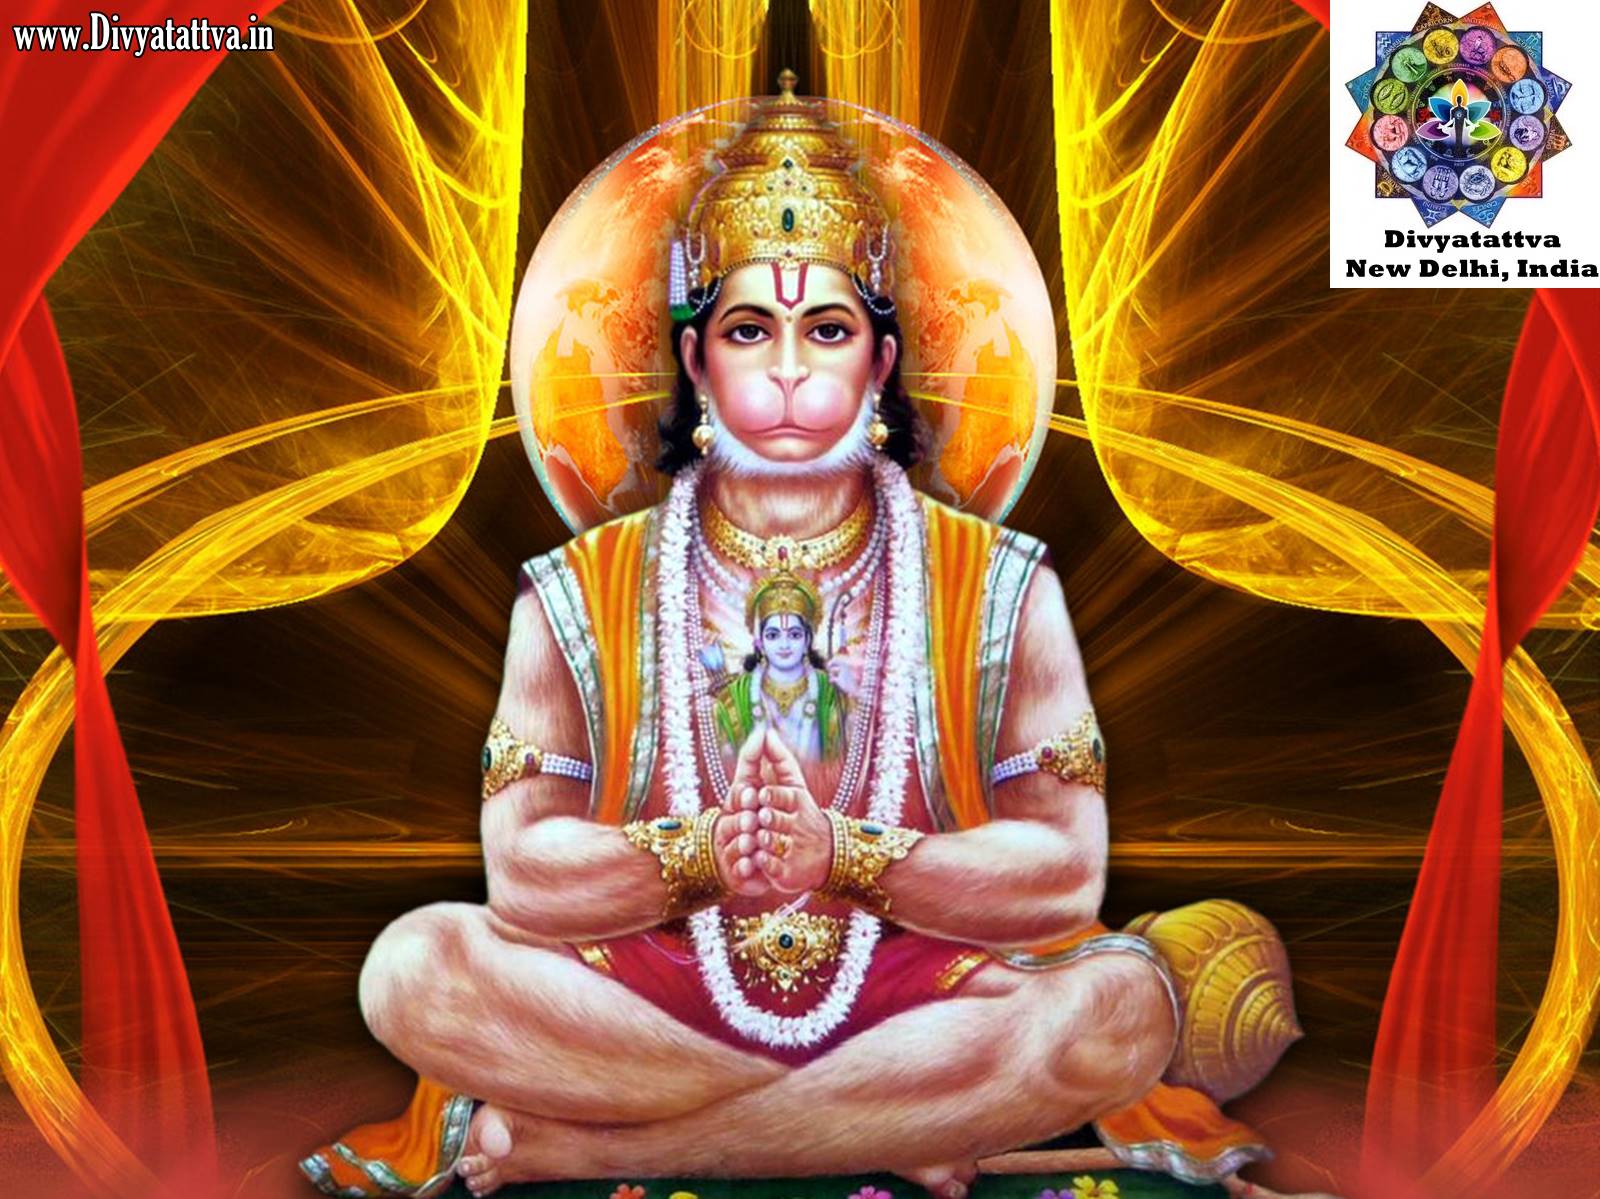 Divyatattva Astrology Free Horoscopes Psychic Tarot Yoga Tantra Occult Image Videos, Best Hanuman God HD Wallpaper Hindu Spiritual Background Hanuman ji HD image New Full HD Photo of Hanumanji Picture